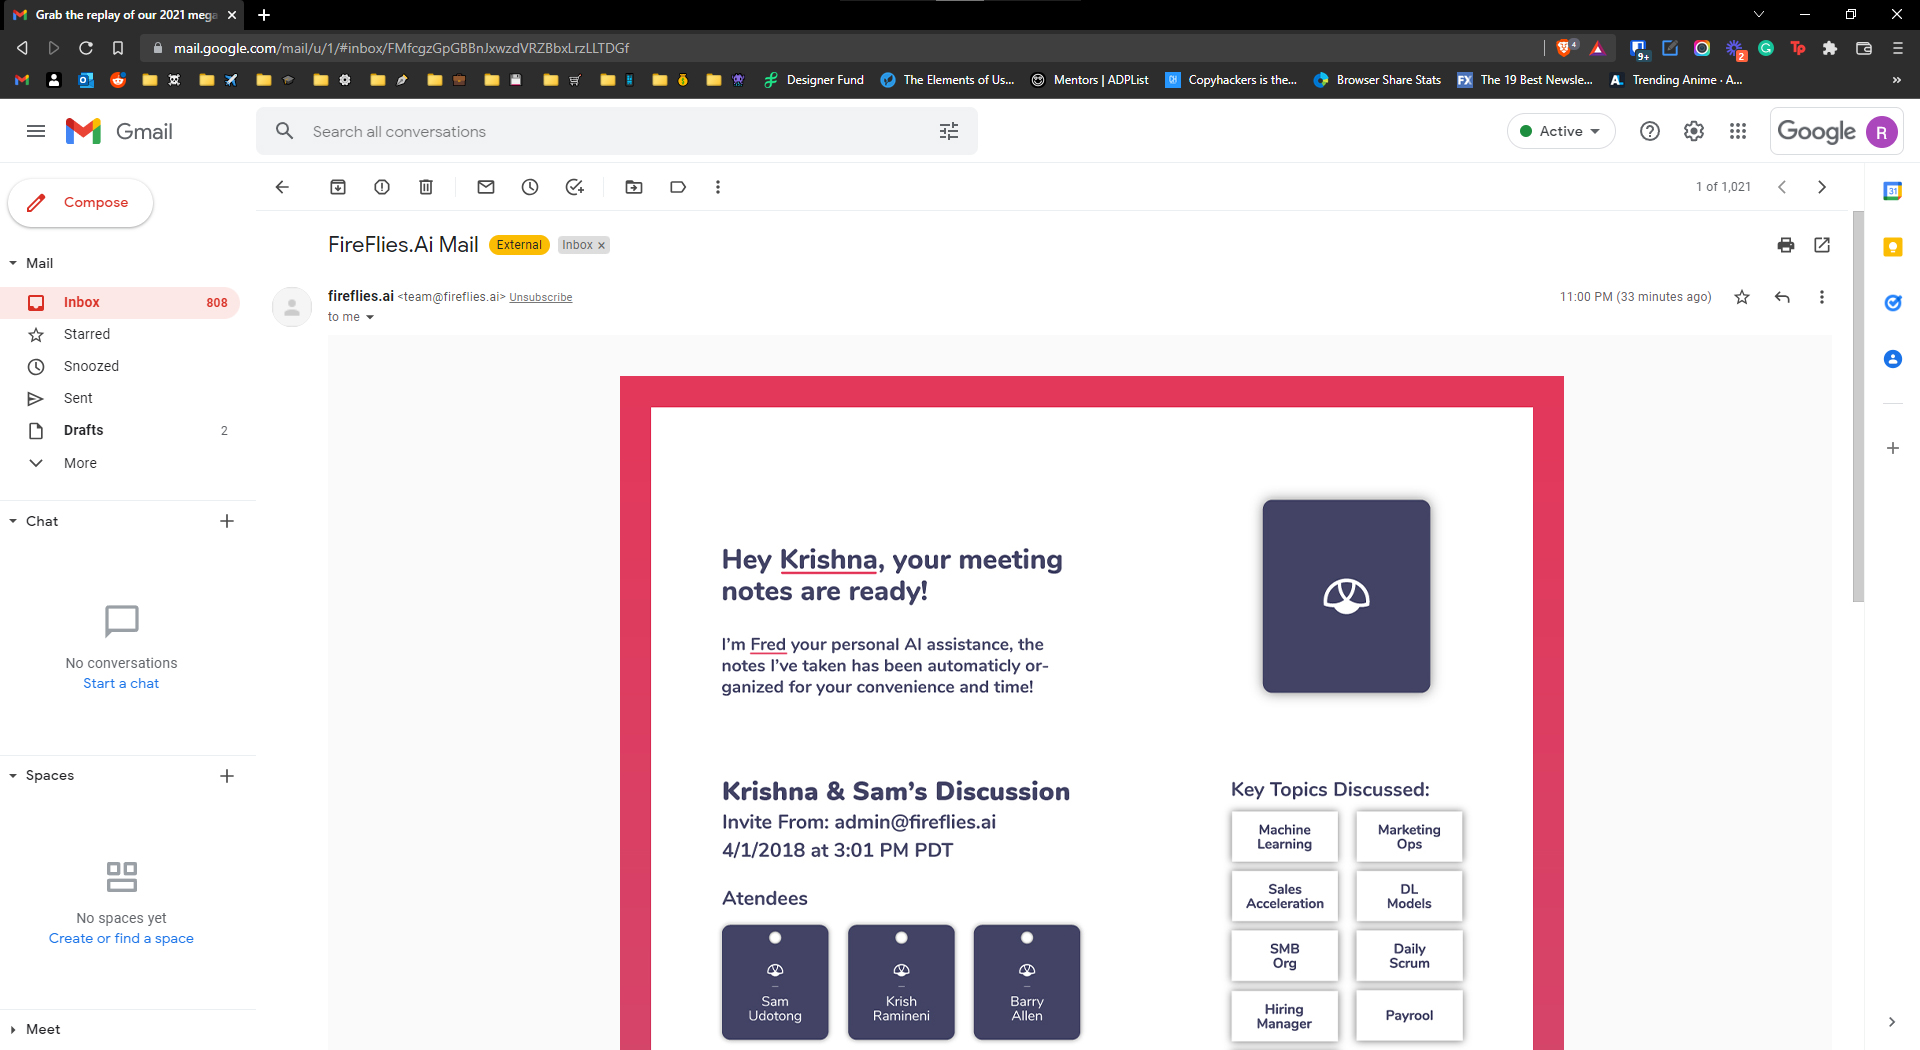 Desktop Email Designed by Raymond Shen for Fireflies.ai 2018